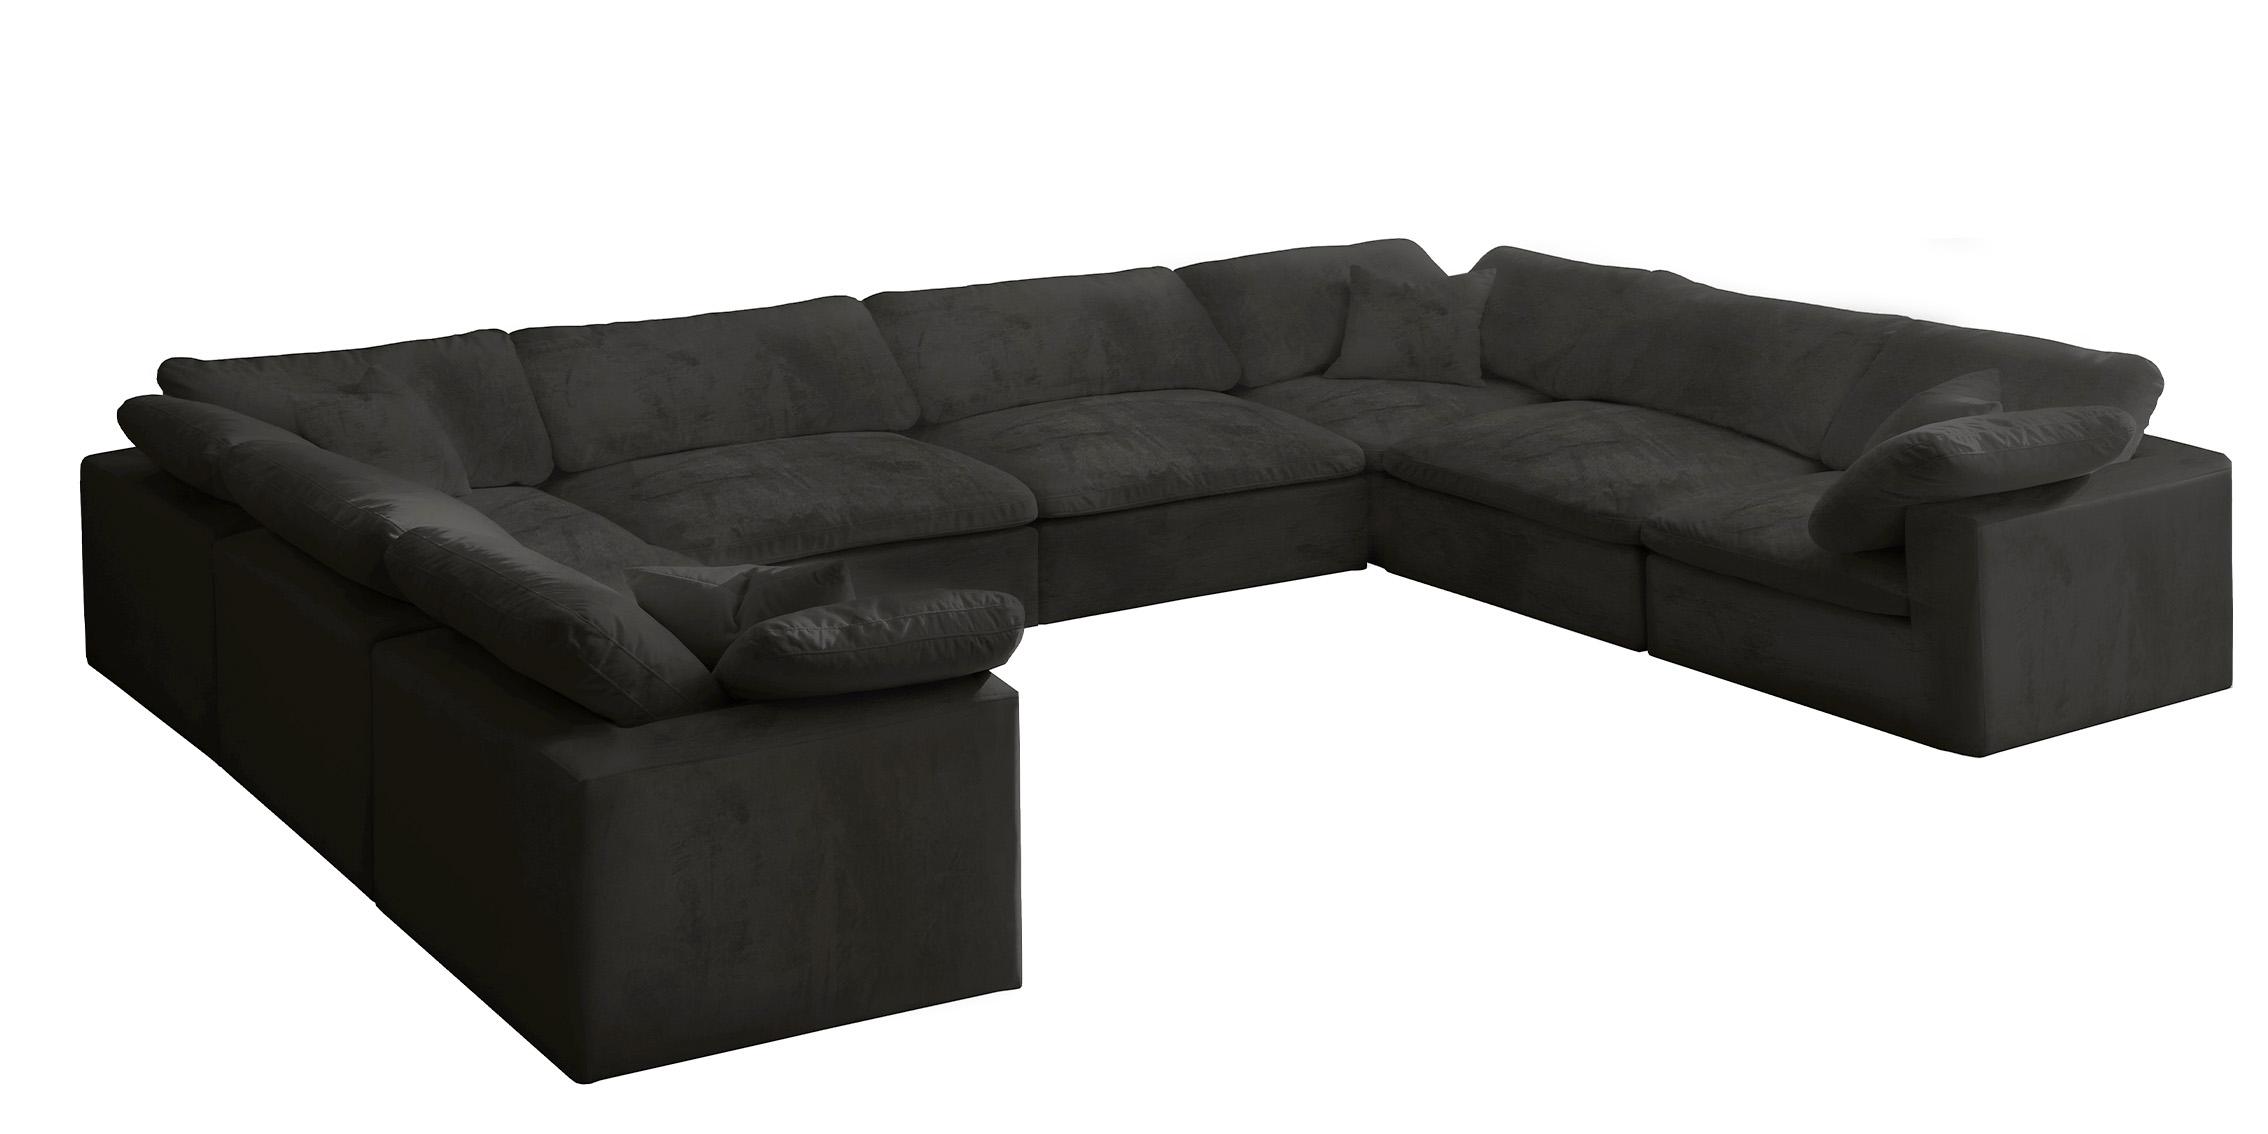 Contemporary, Modern Modular Sectional Sofa 634Black-Sec8A 634Black-Sec8A in Black Fabric